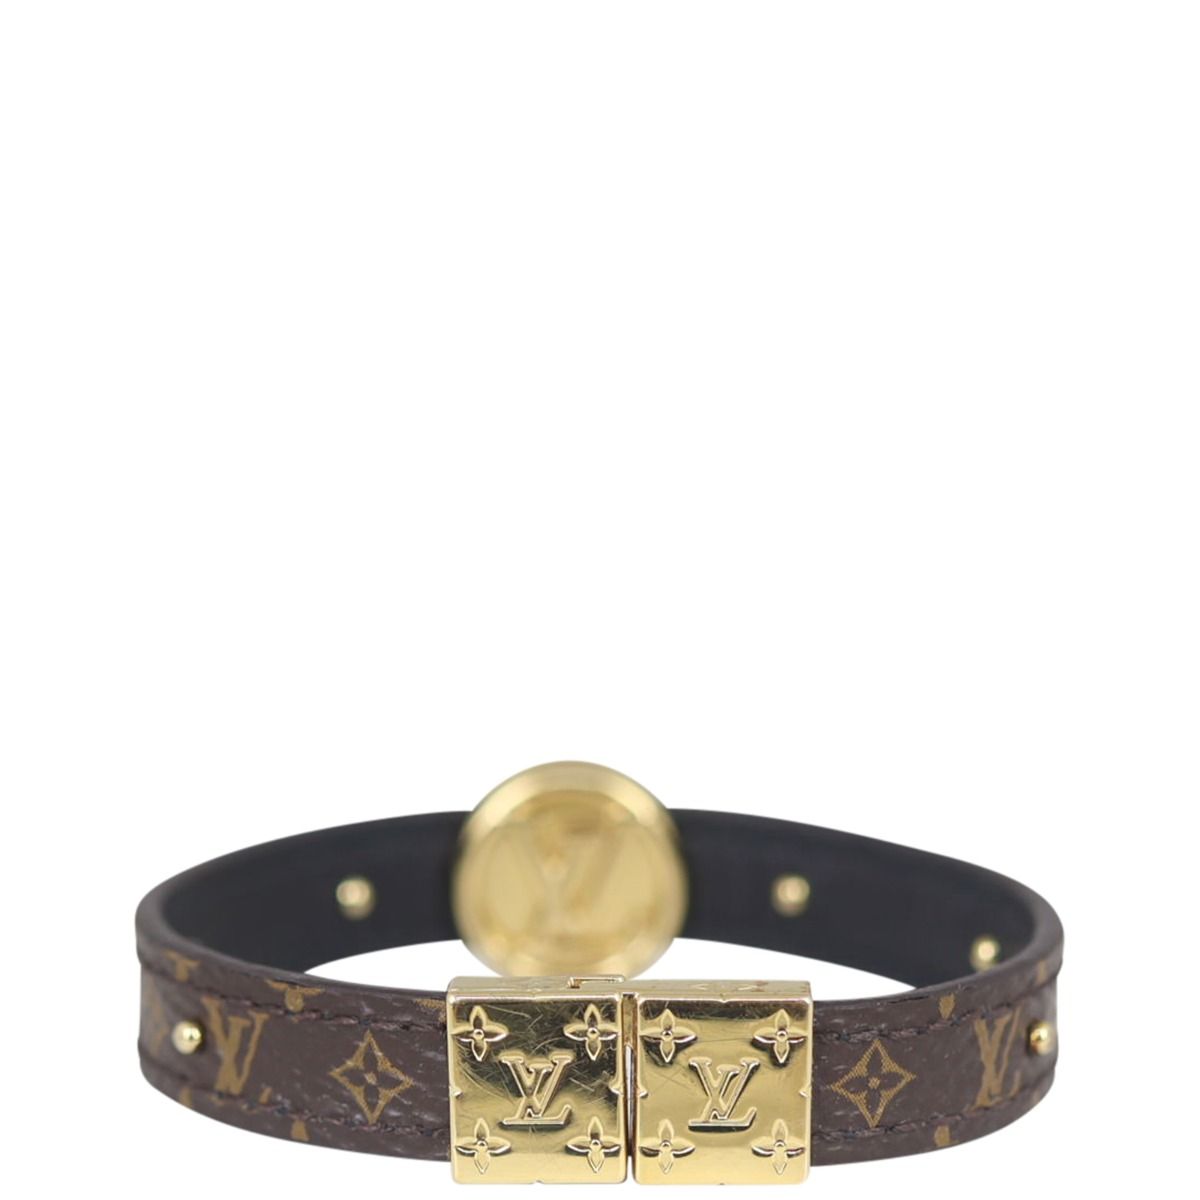 Bracelet Louis Vuitton Gold in Chain - 30945221